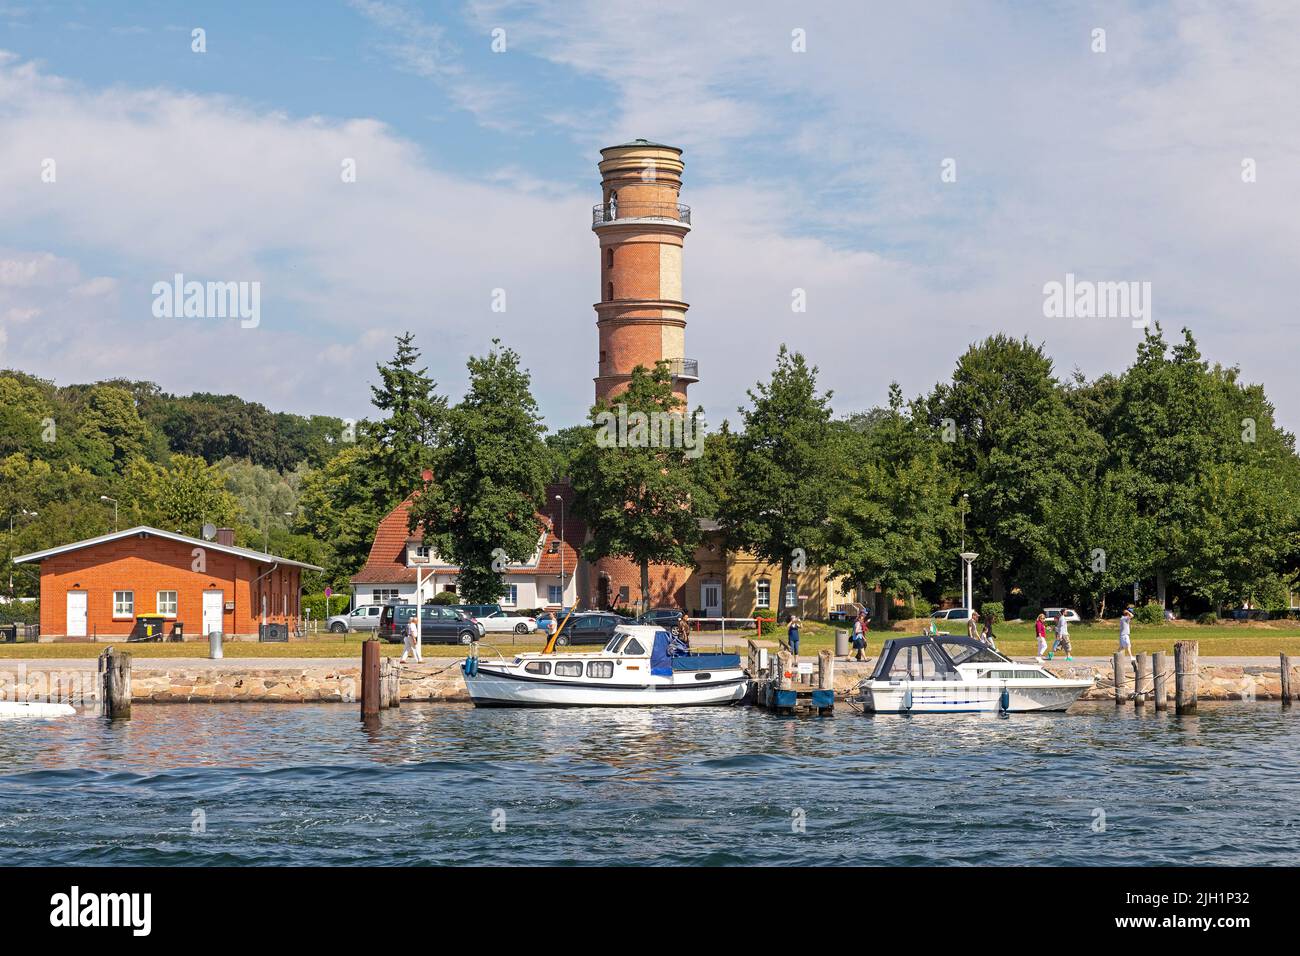 Vieux phare, bateaux, Travemünde, Lübeck, Schleswig-Holstein, Allemagne Banque D'Images